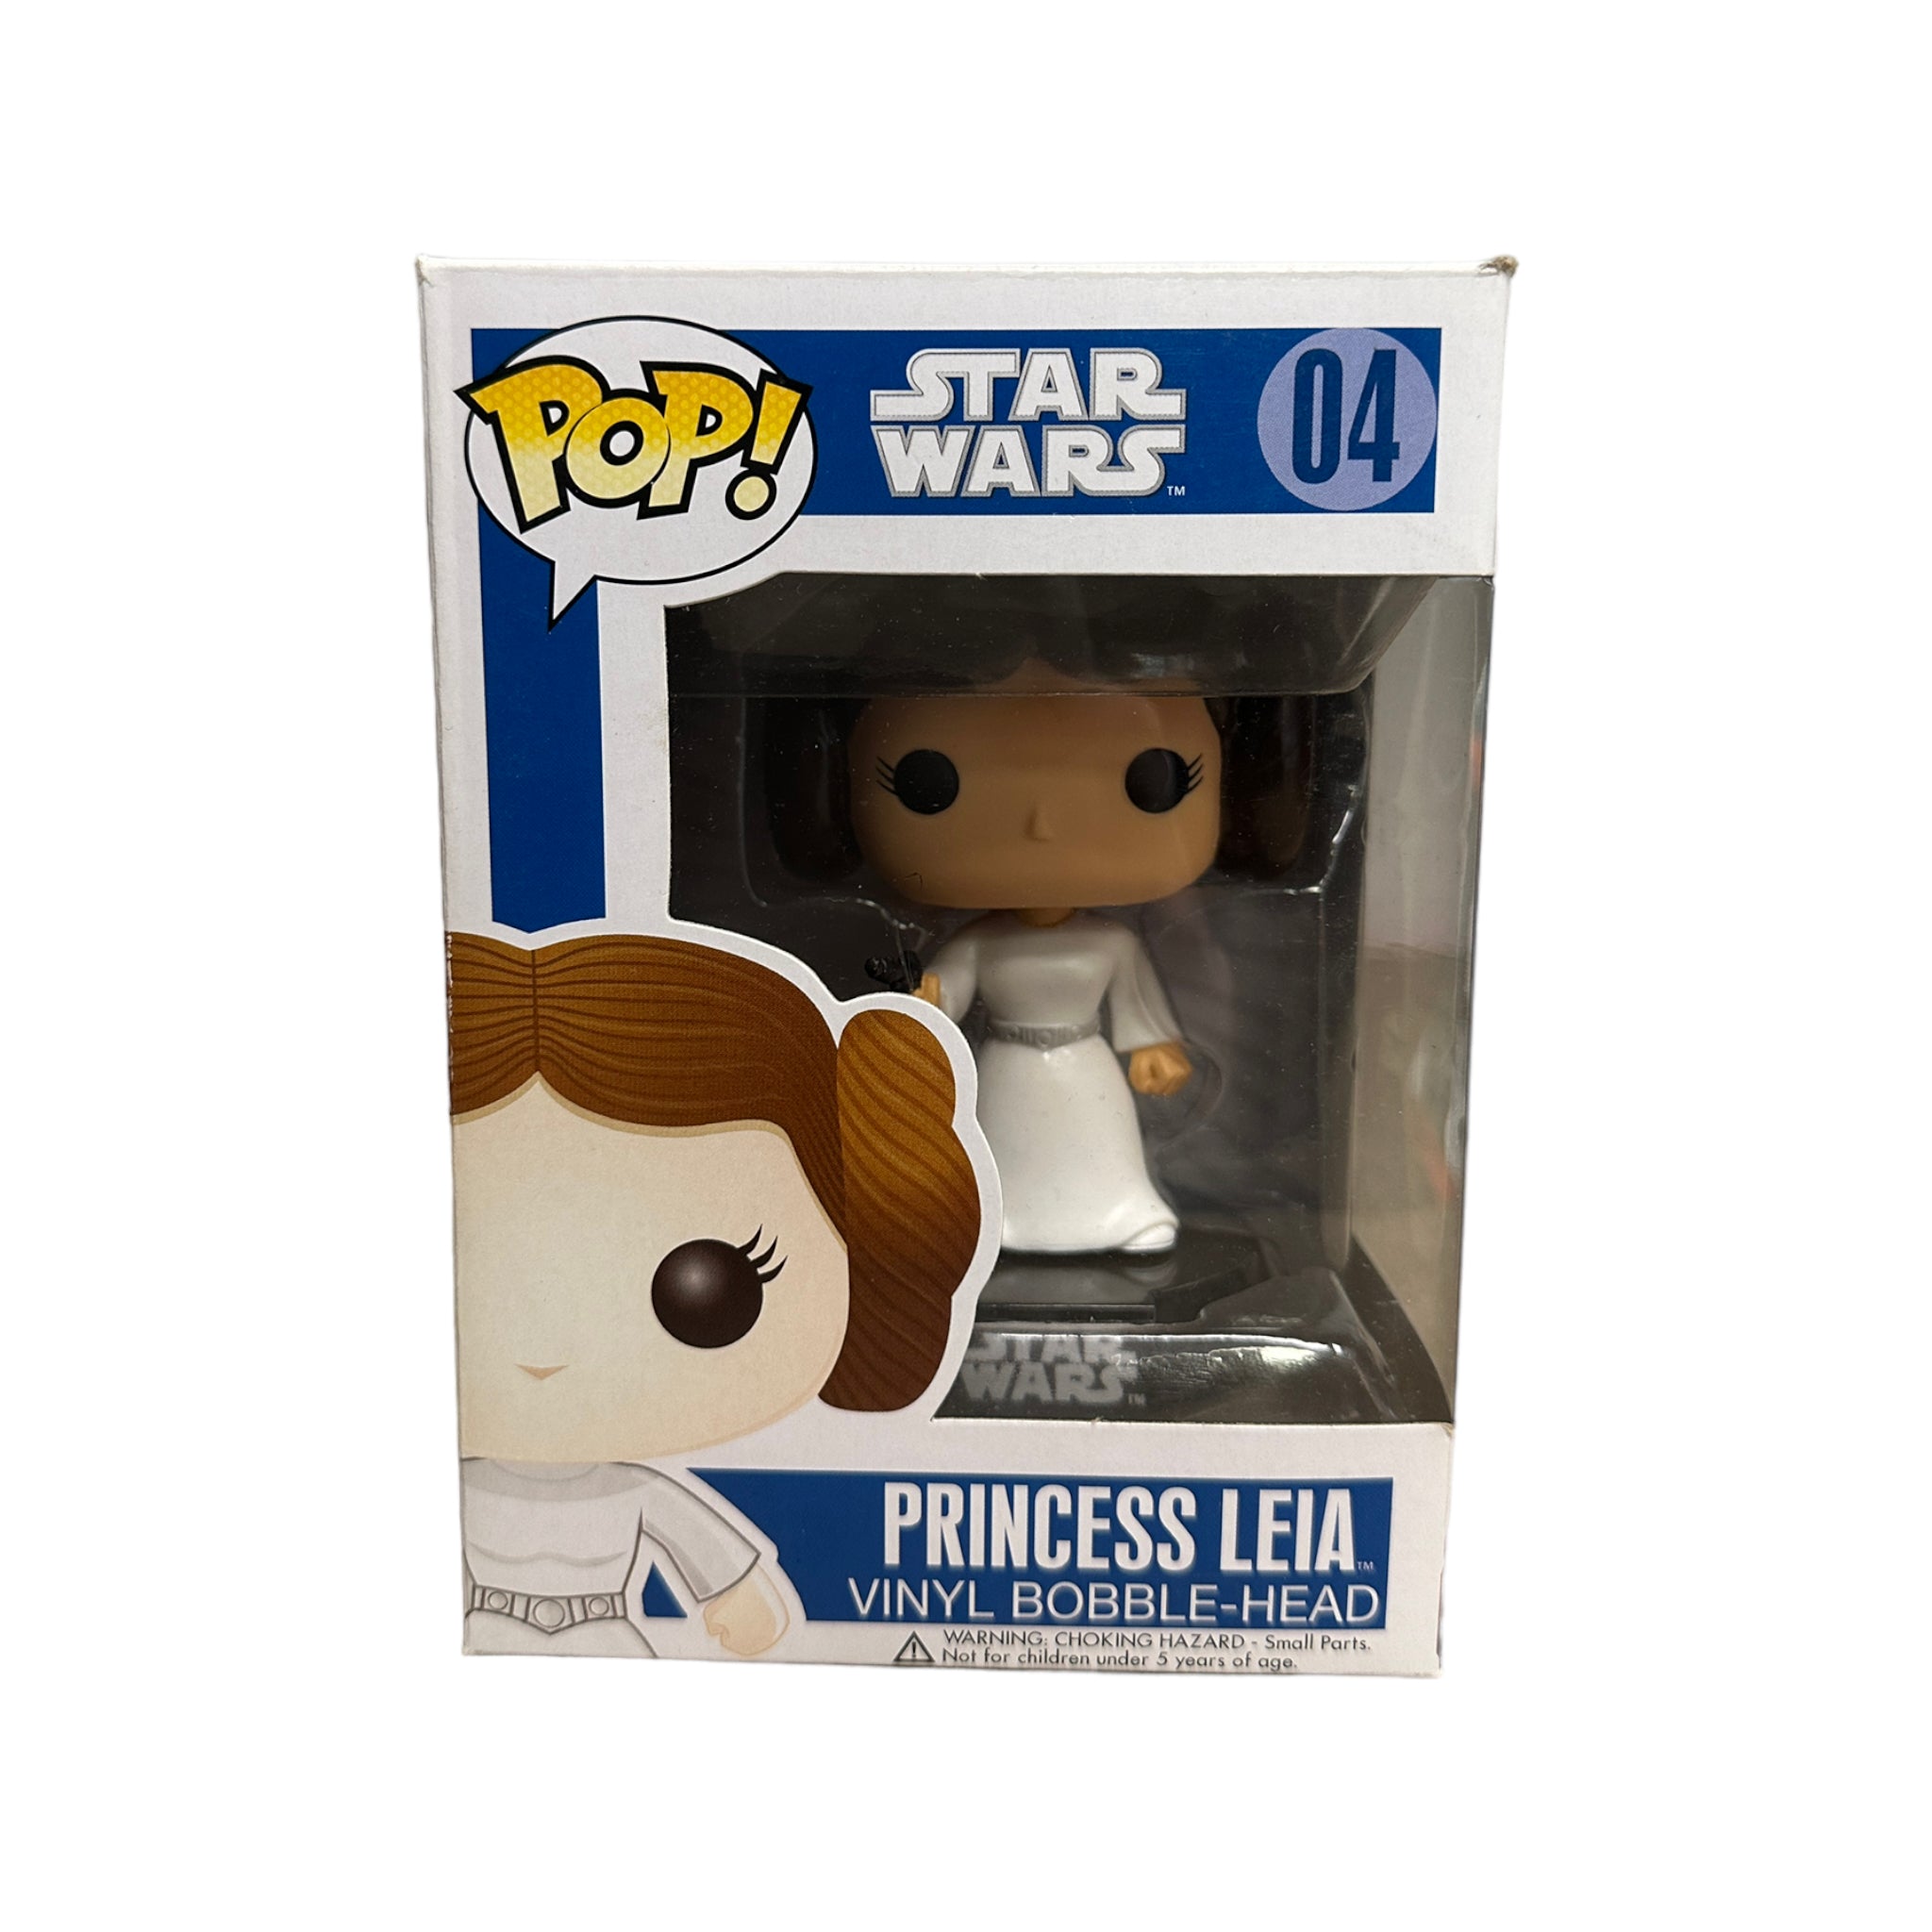 Princess Leia #04 (Large Writing) Funko Pop! - Star Wars - 2013 Pop! - Condition 7/10